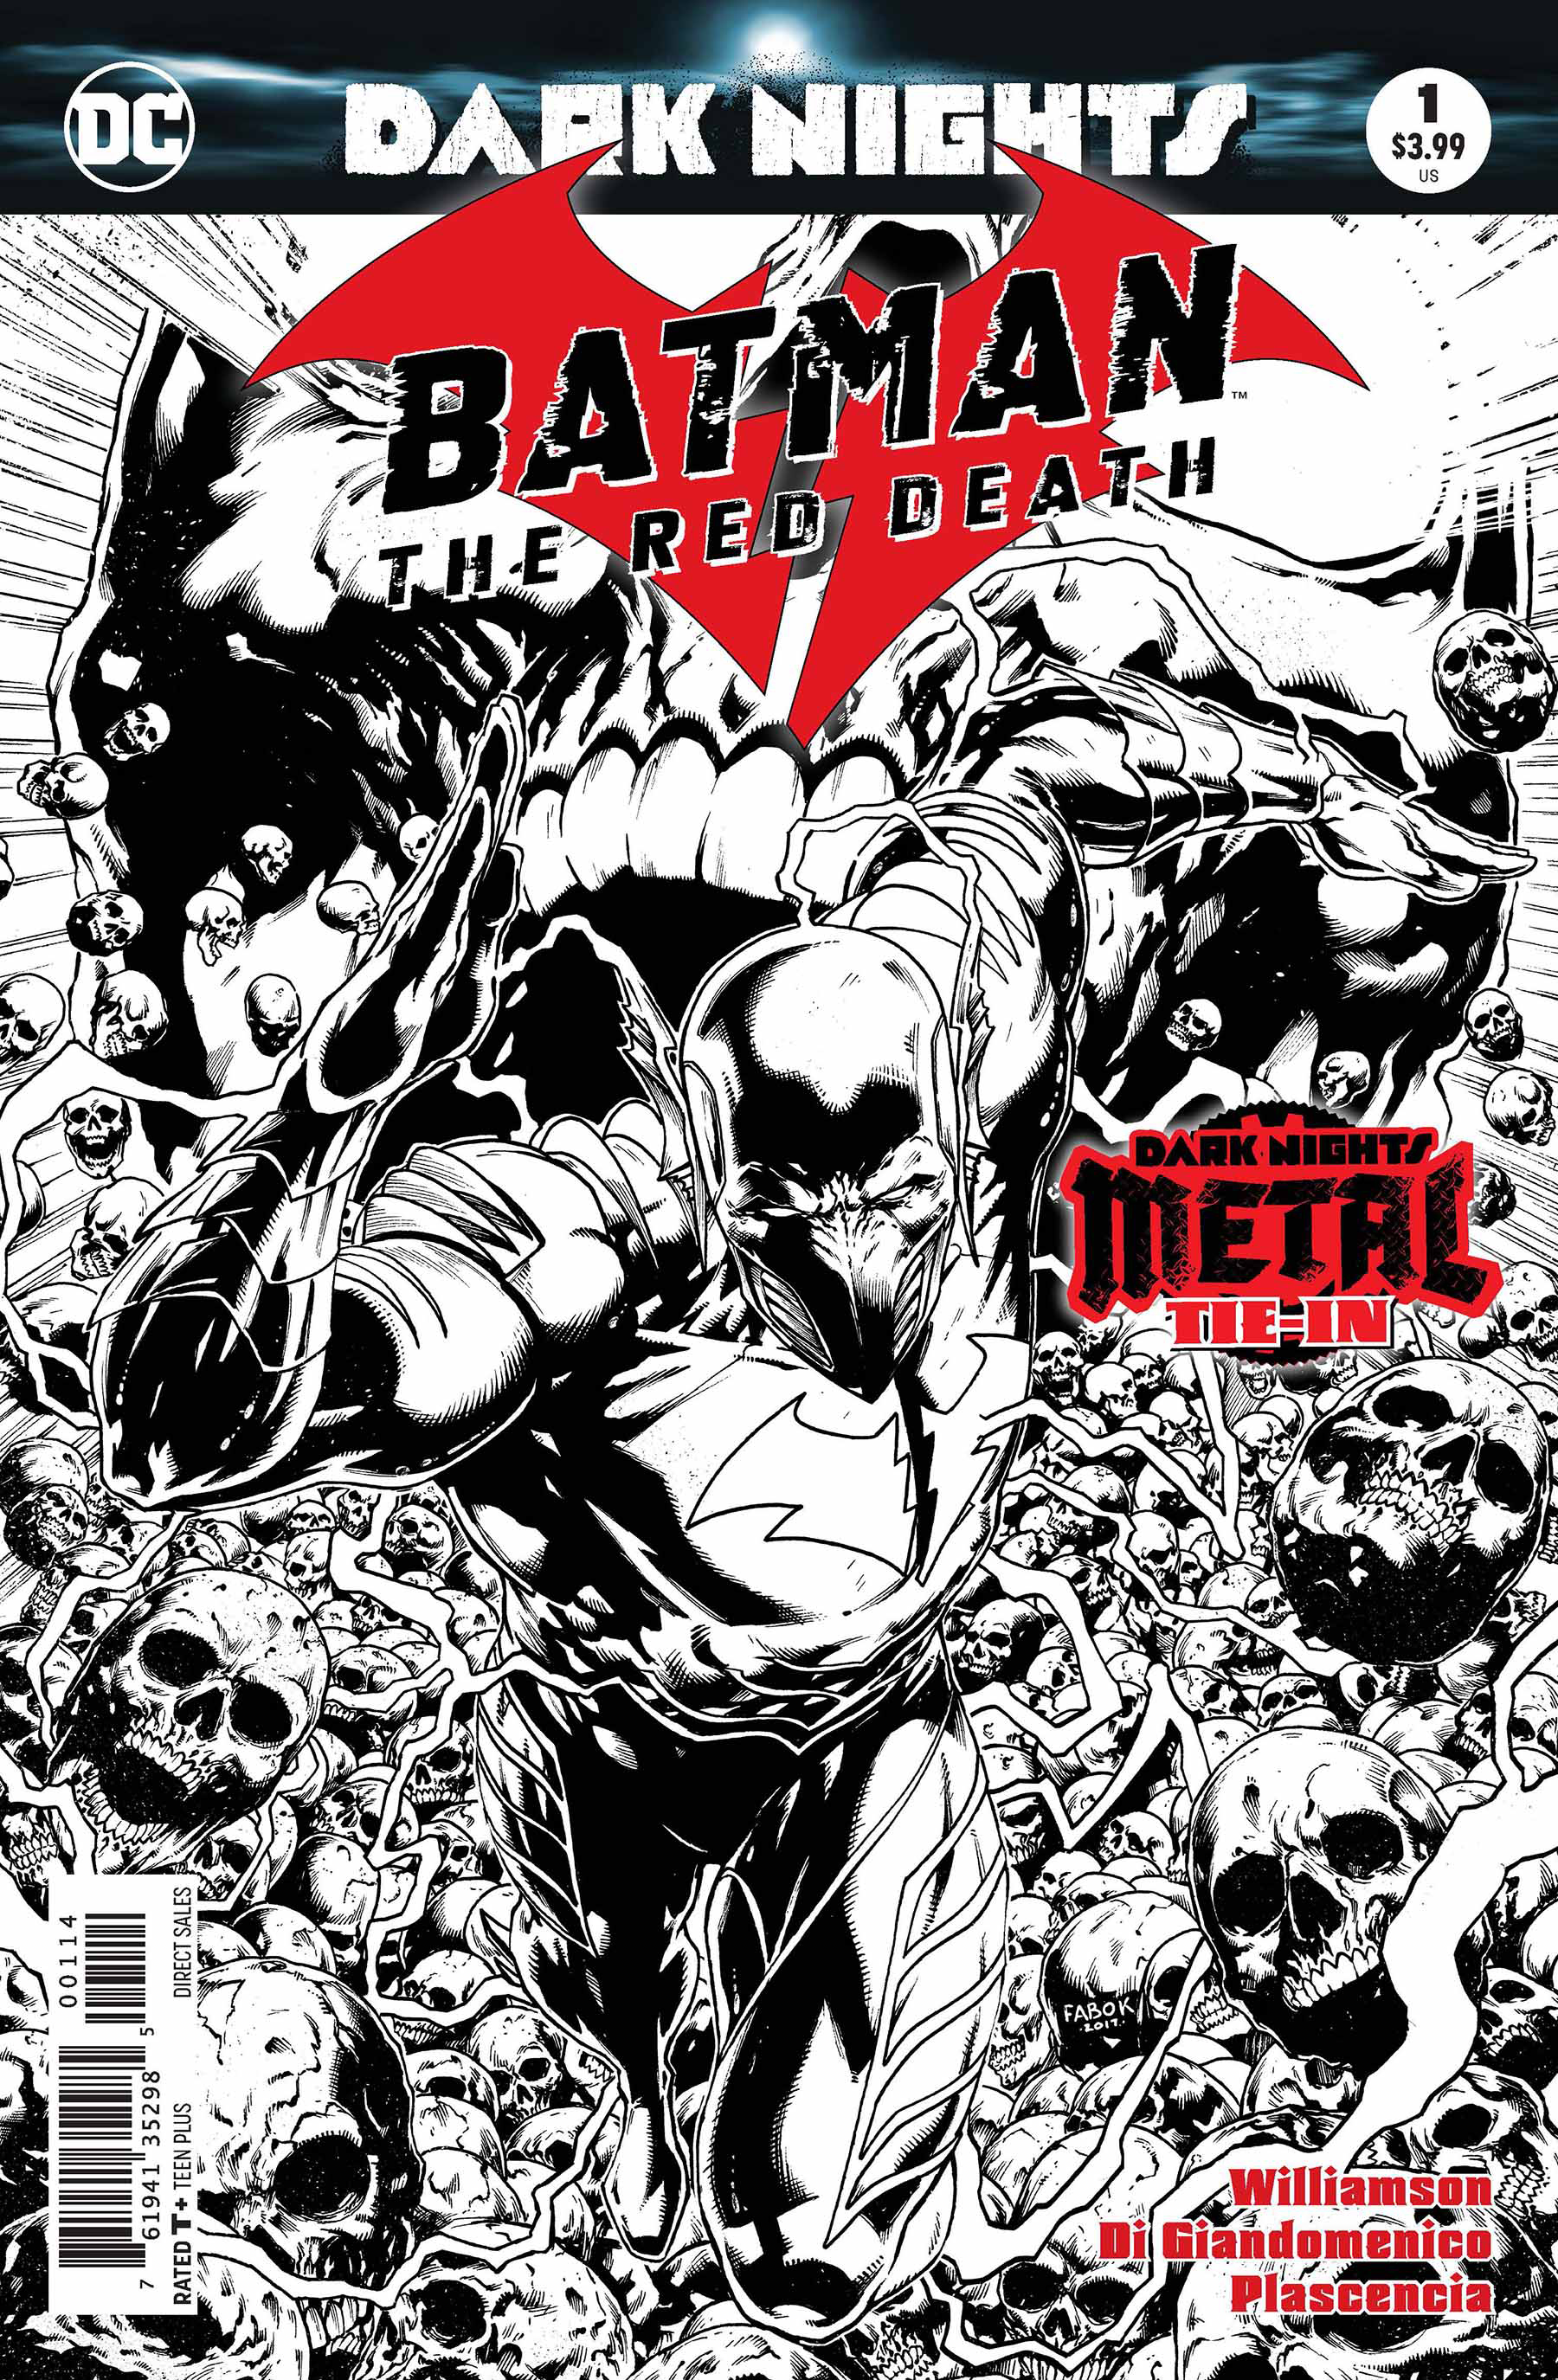 NOV178101 - BATMAN THE RED DEATH #1 4TH PTG METAL - Previews World